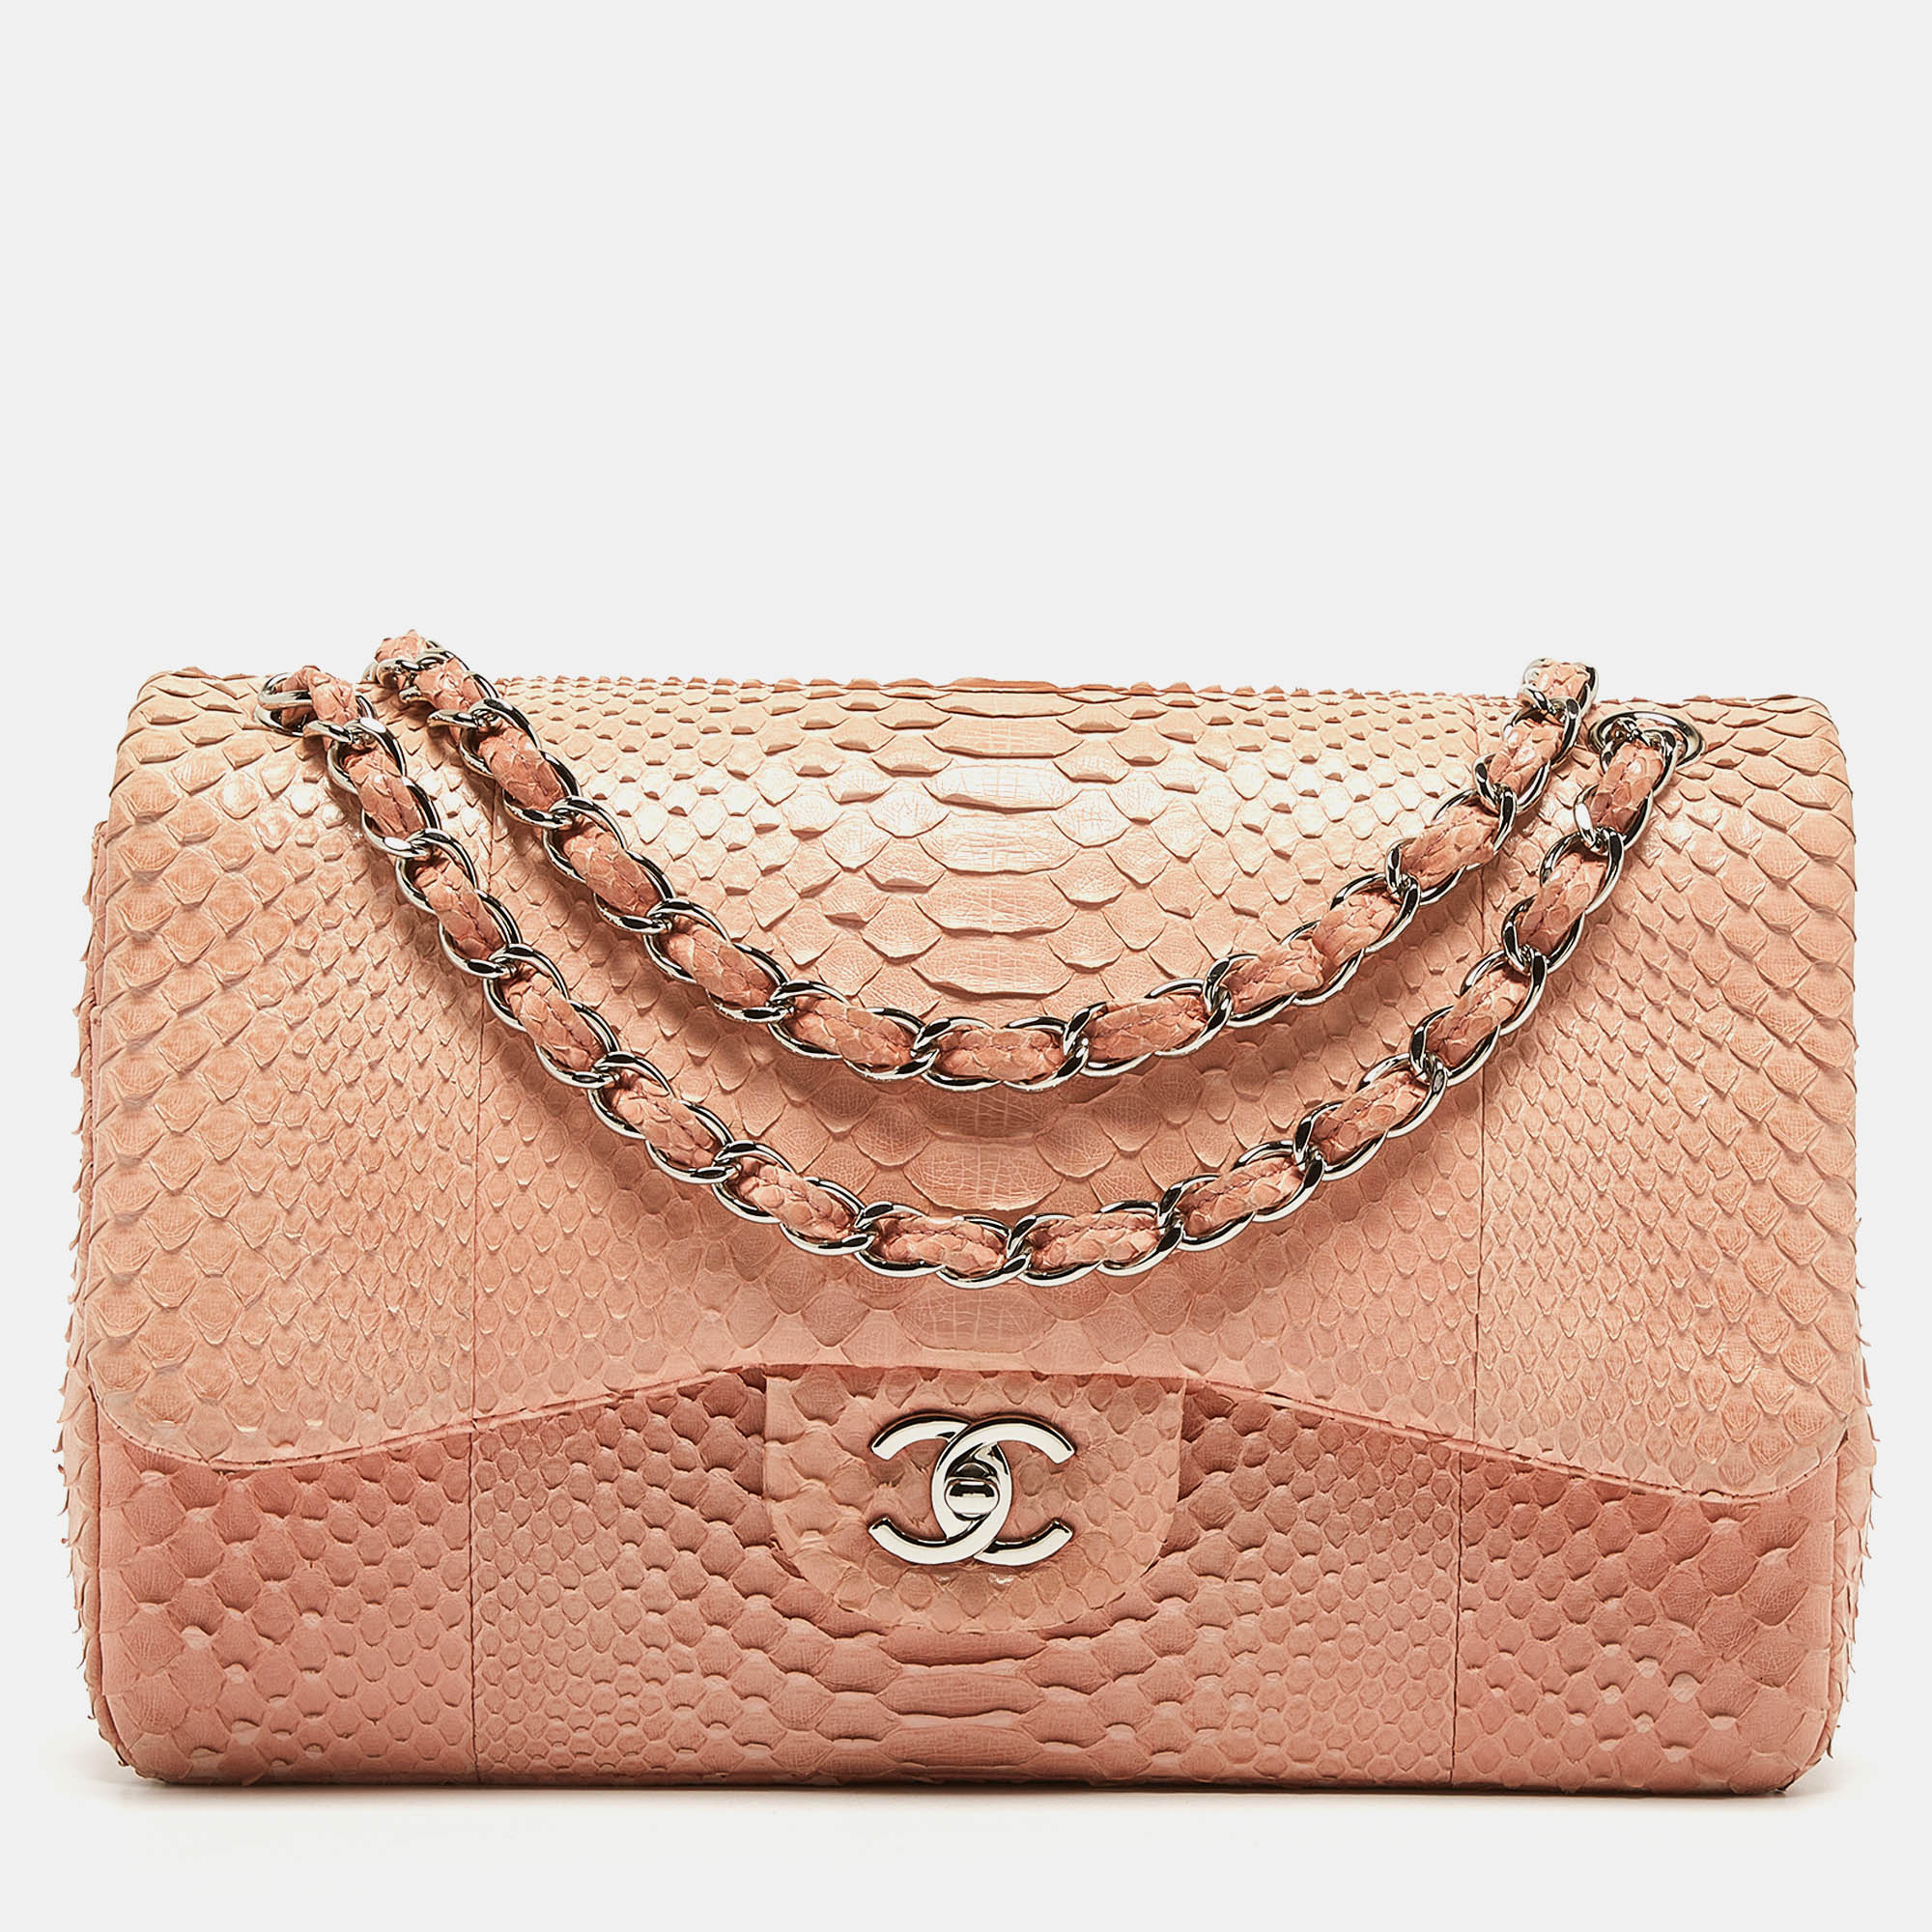 Chanel peach python jumbo classic double flap bag